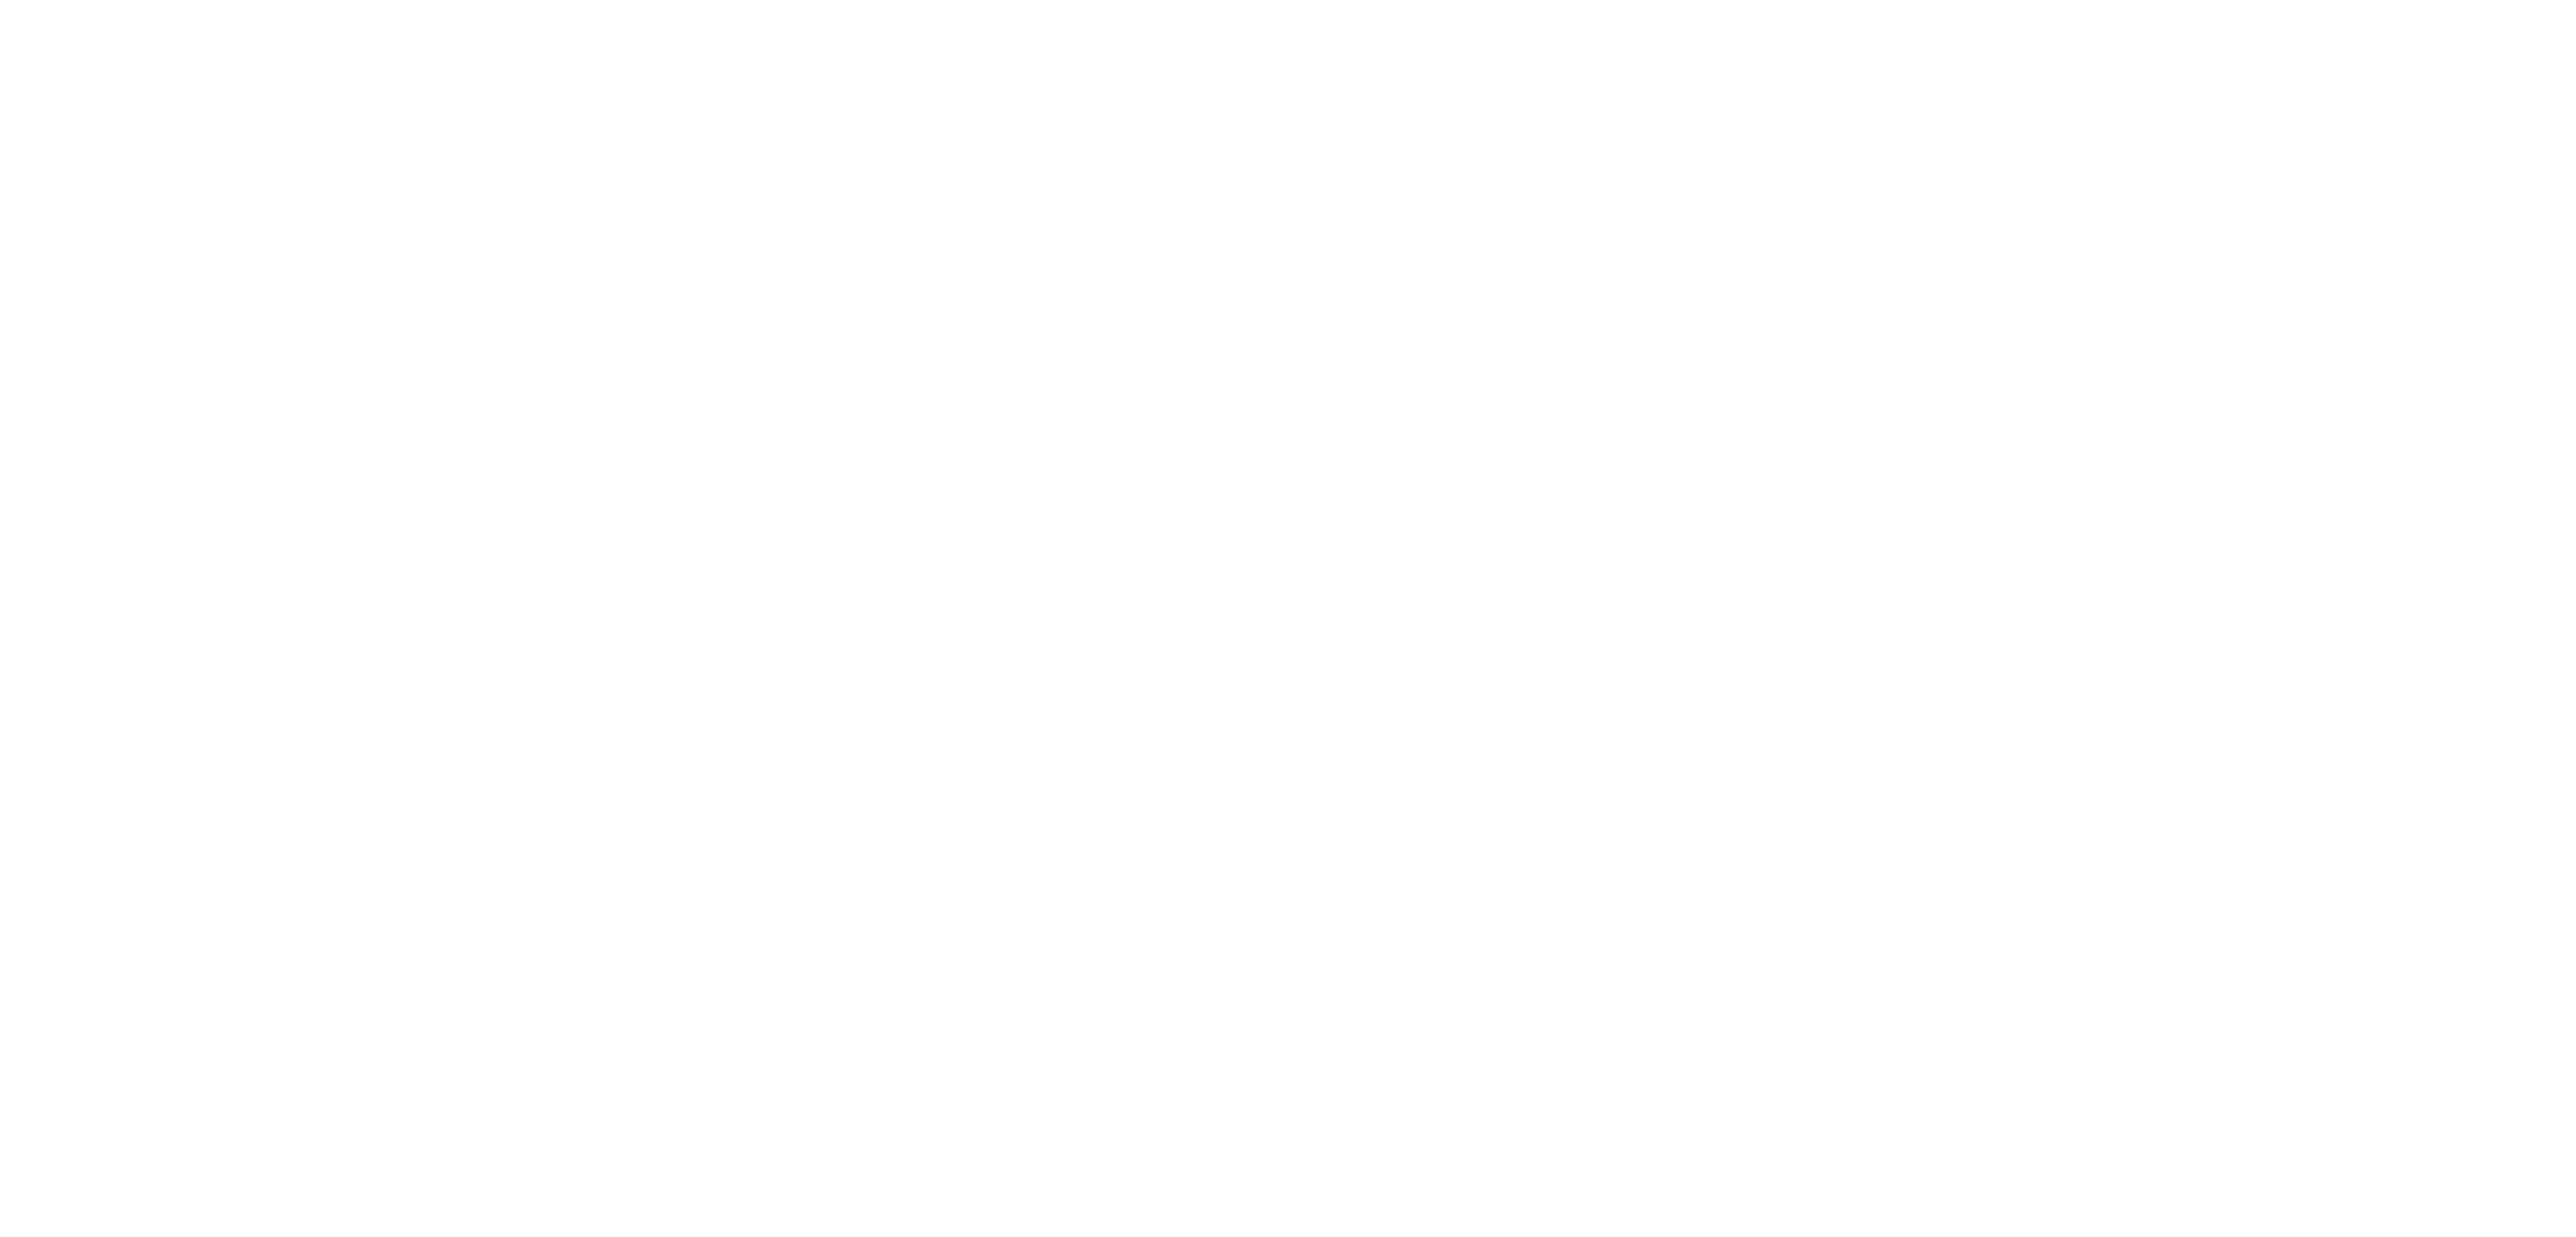 globe map